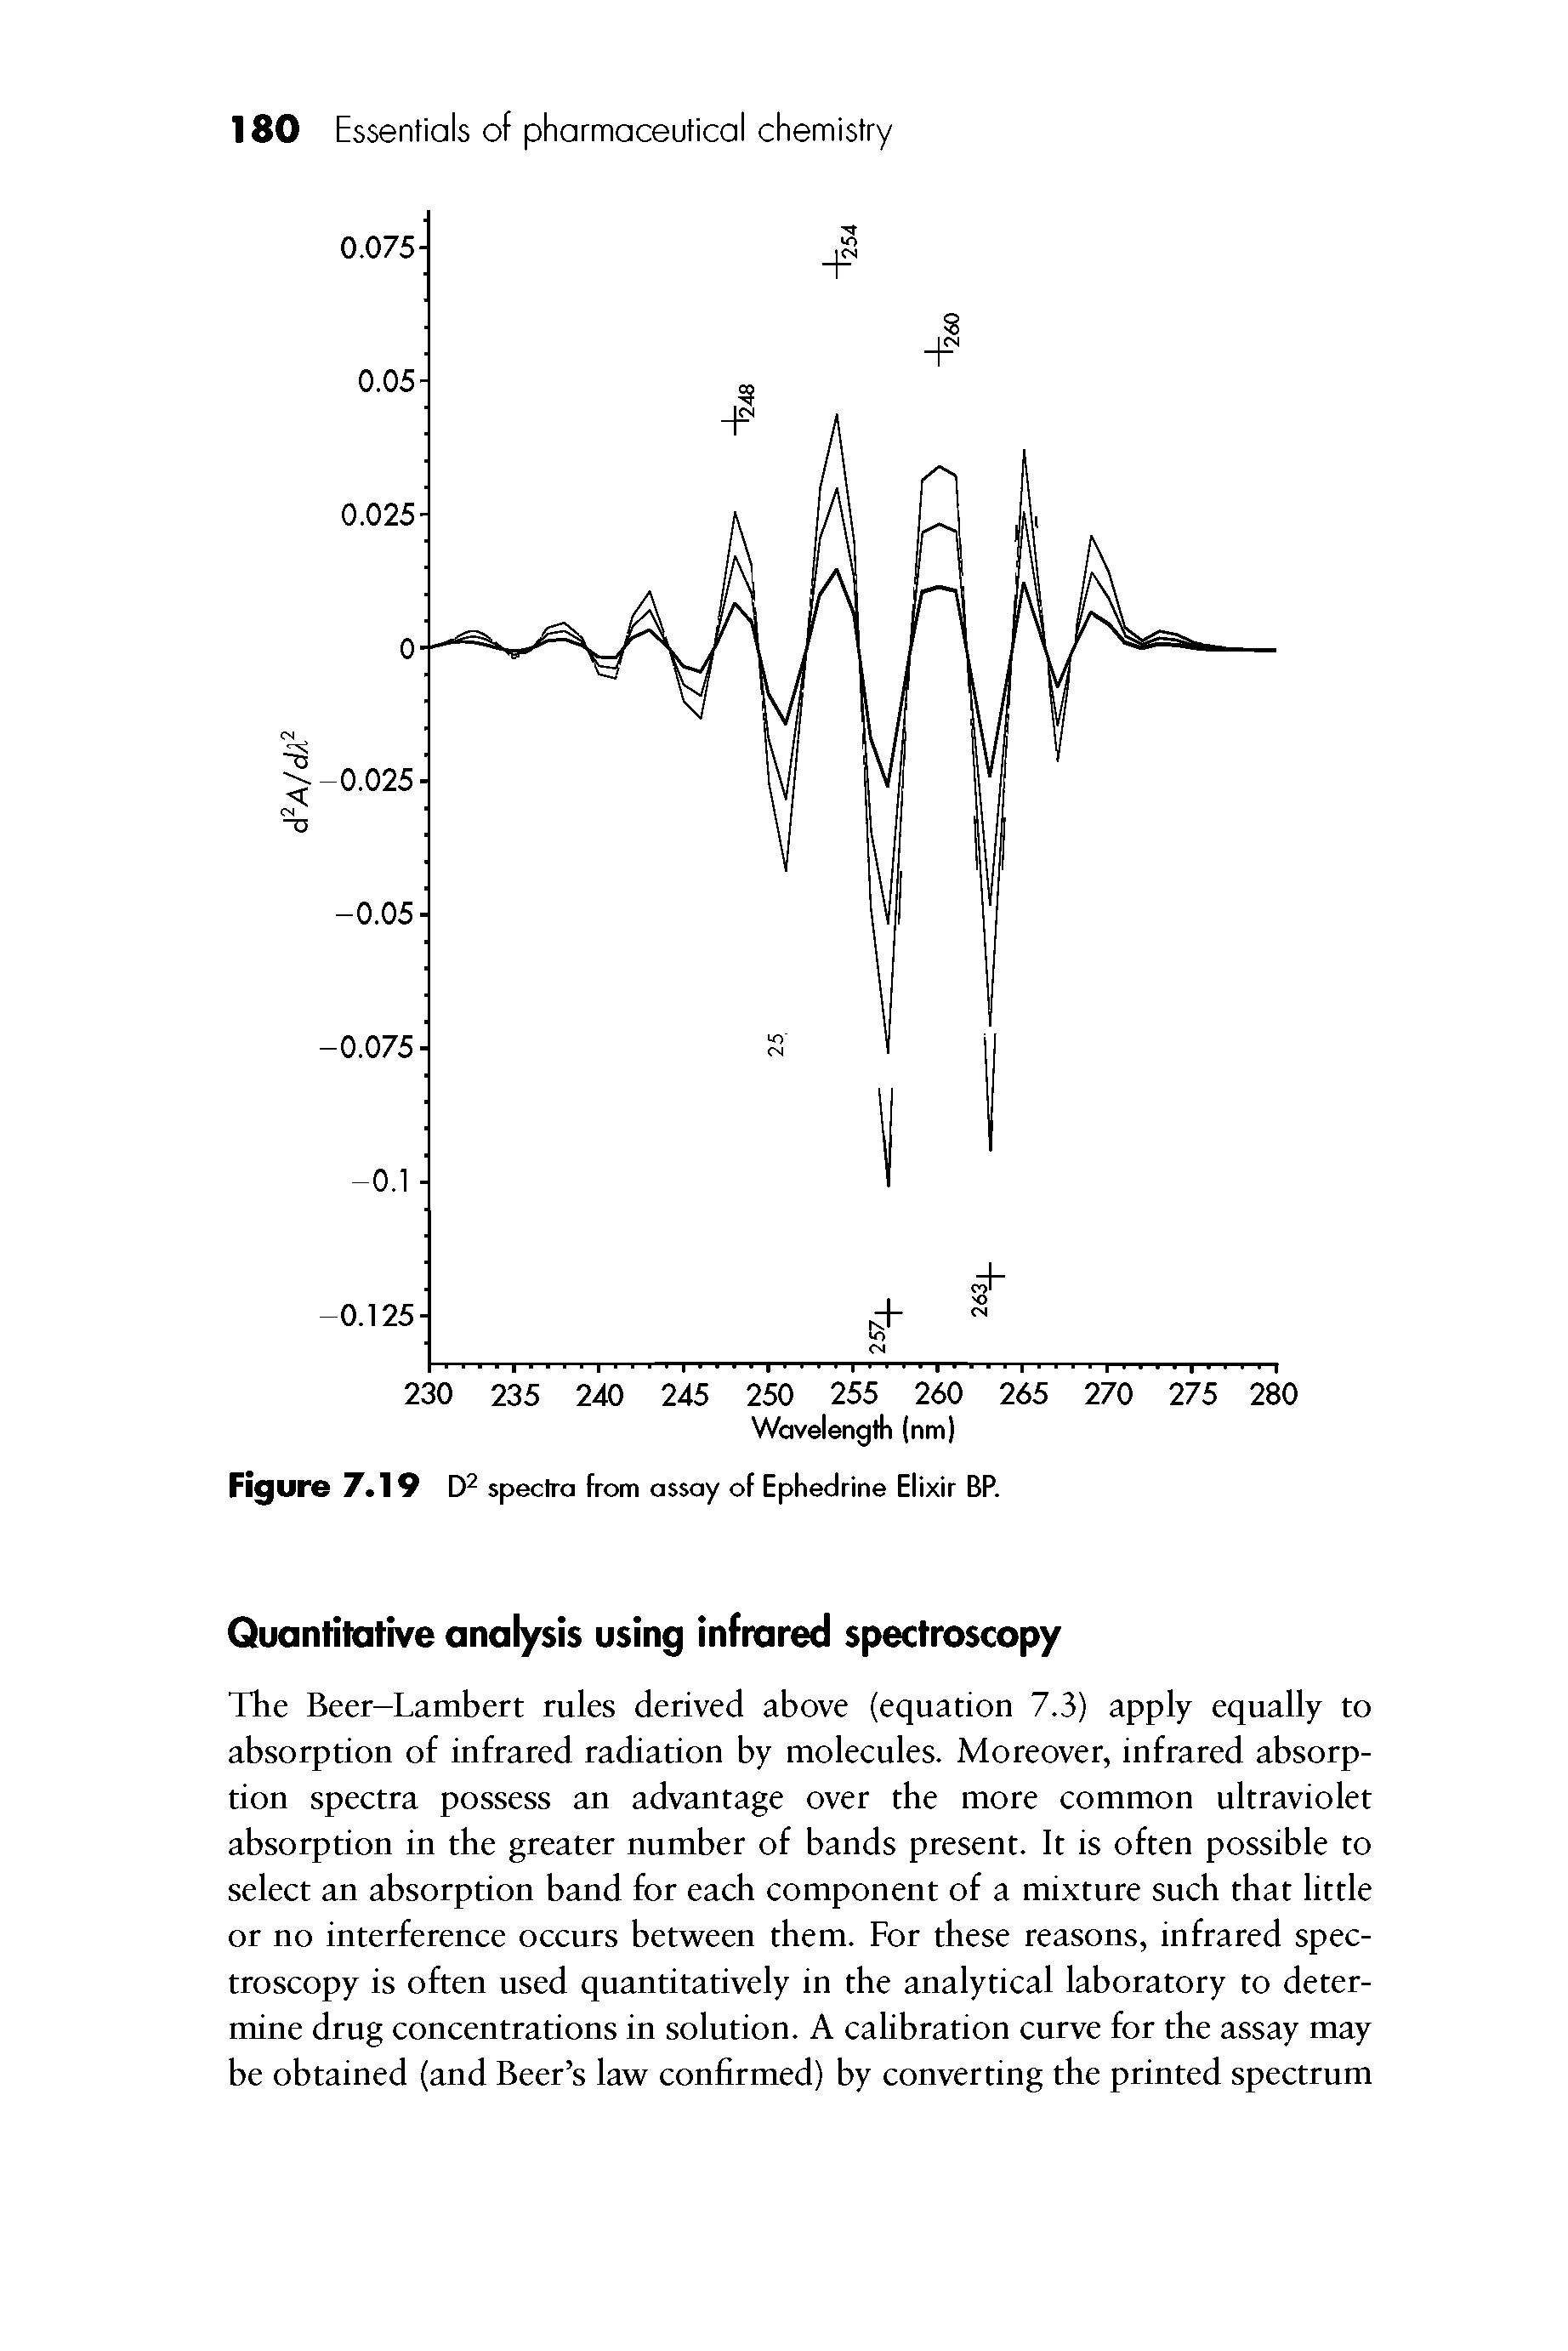 Figure 7.19 D2 spectra from assay of Ephedrine Elixir BP.